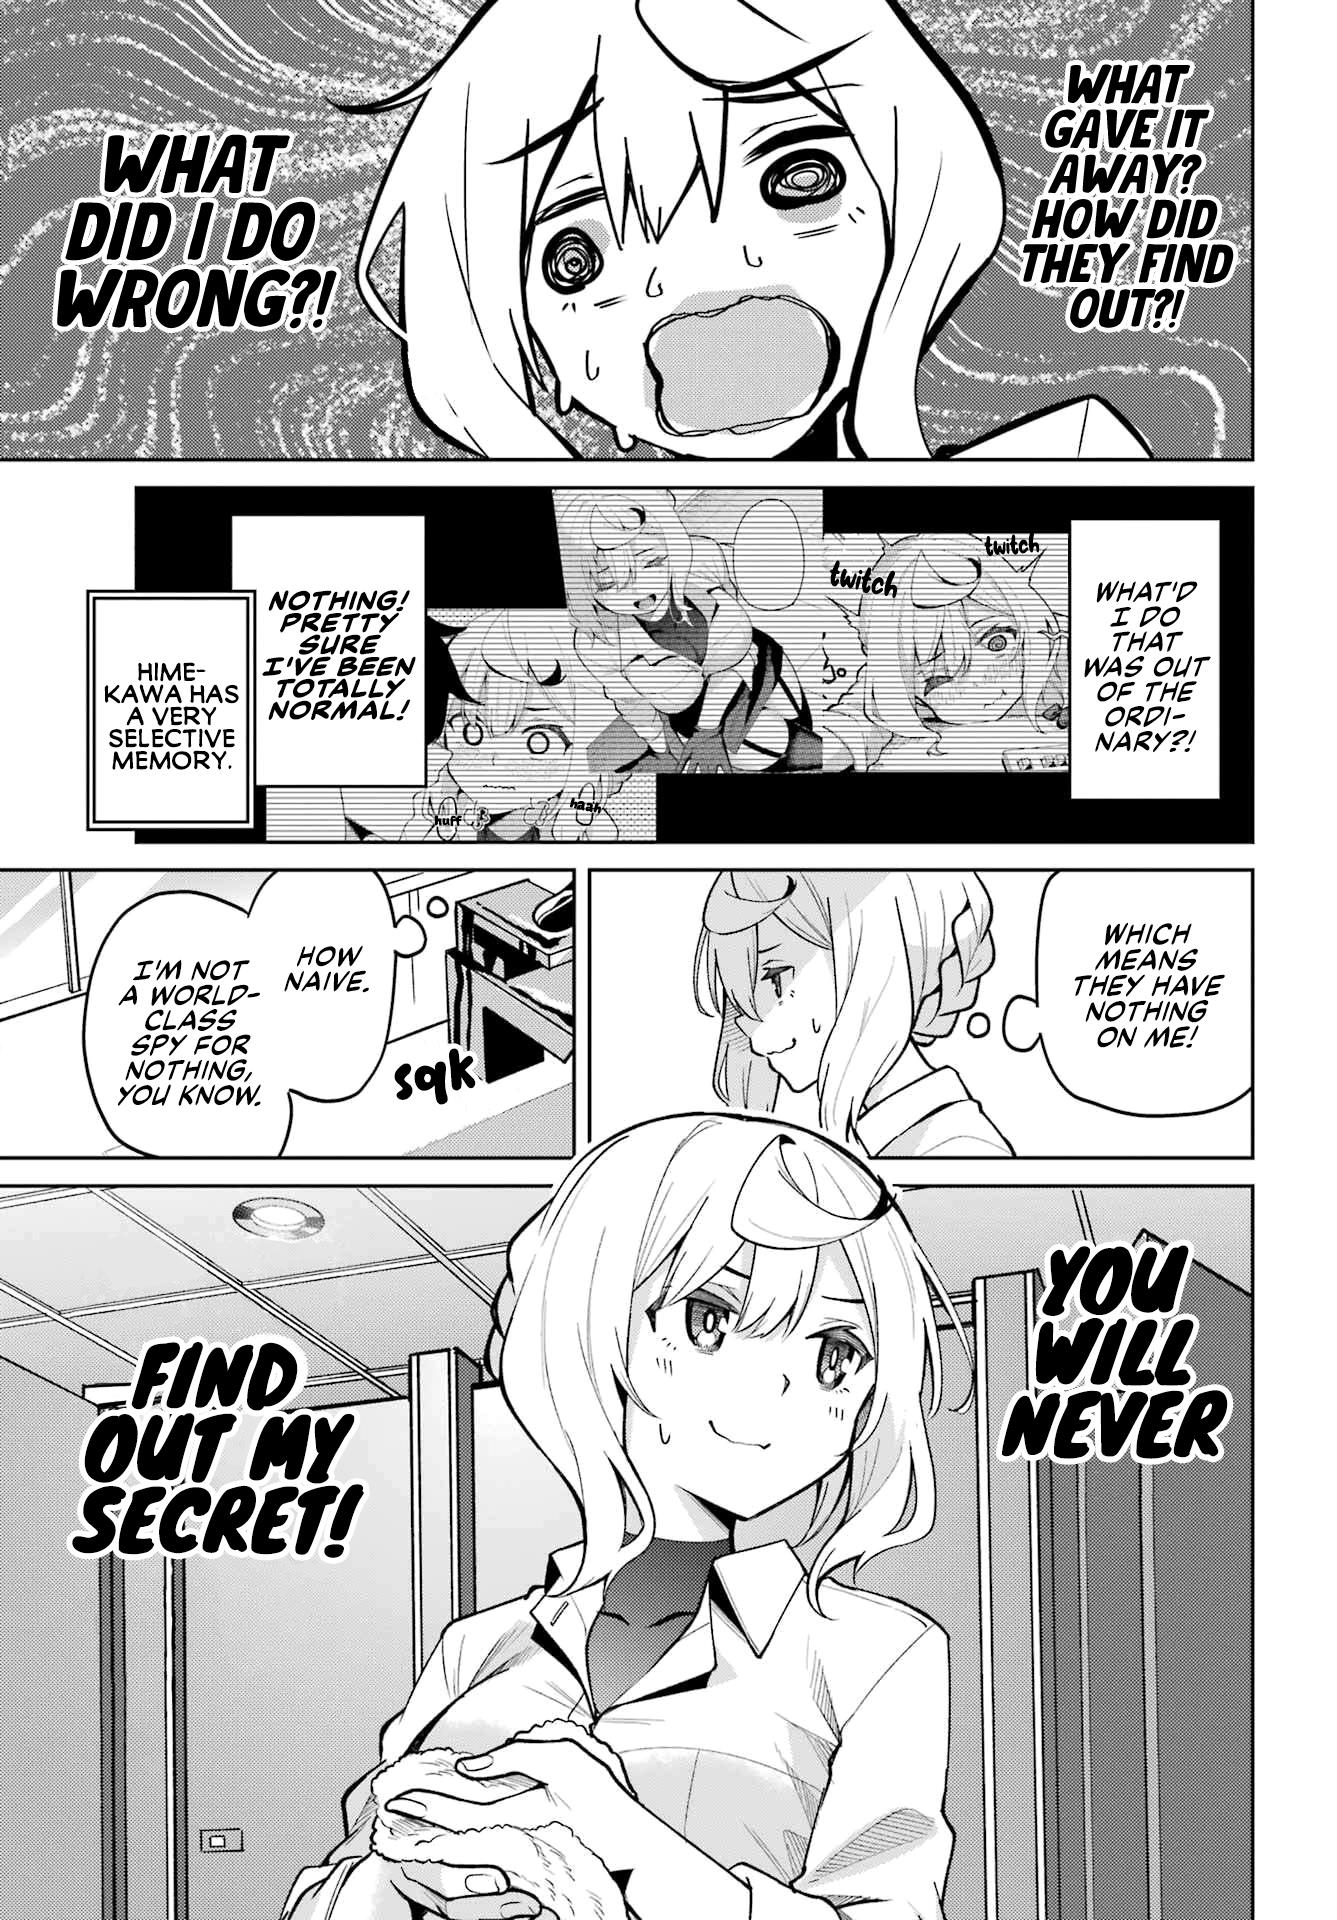 Himekawa-San Seeks Out His Secrets - chapter 4 - #5